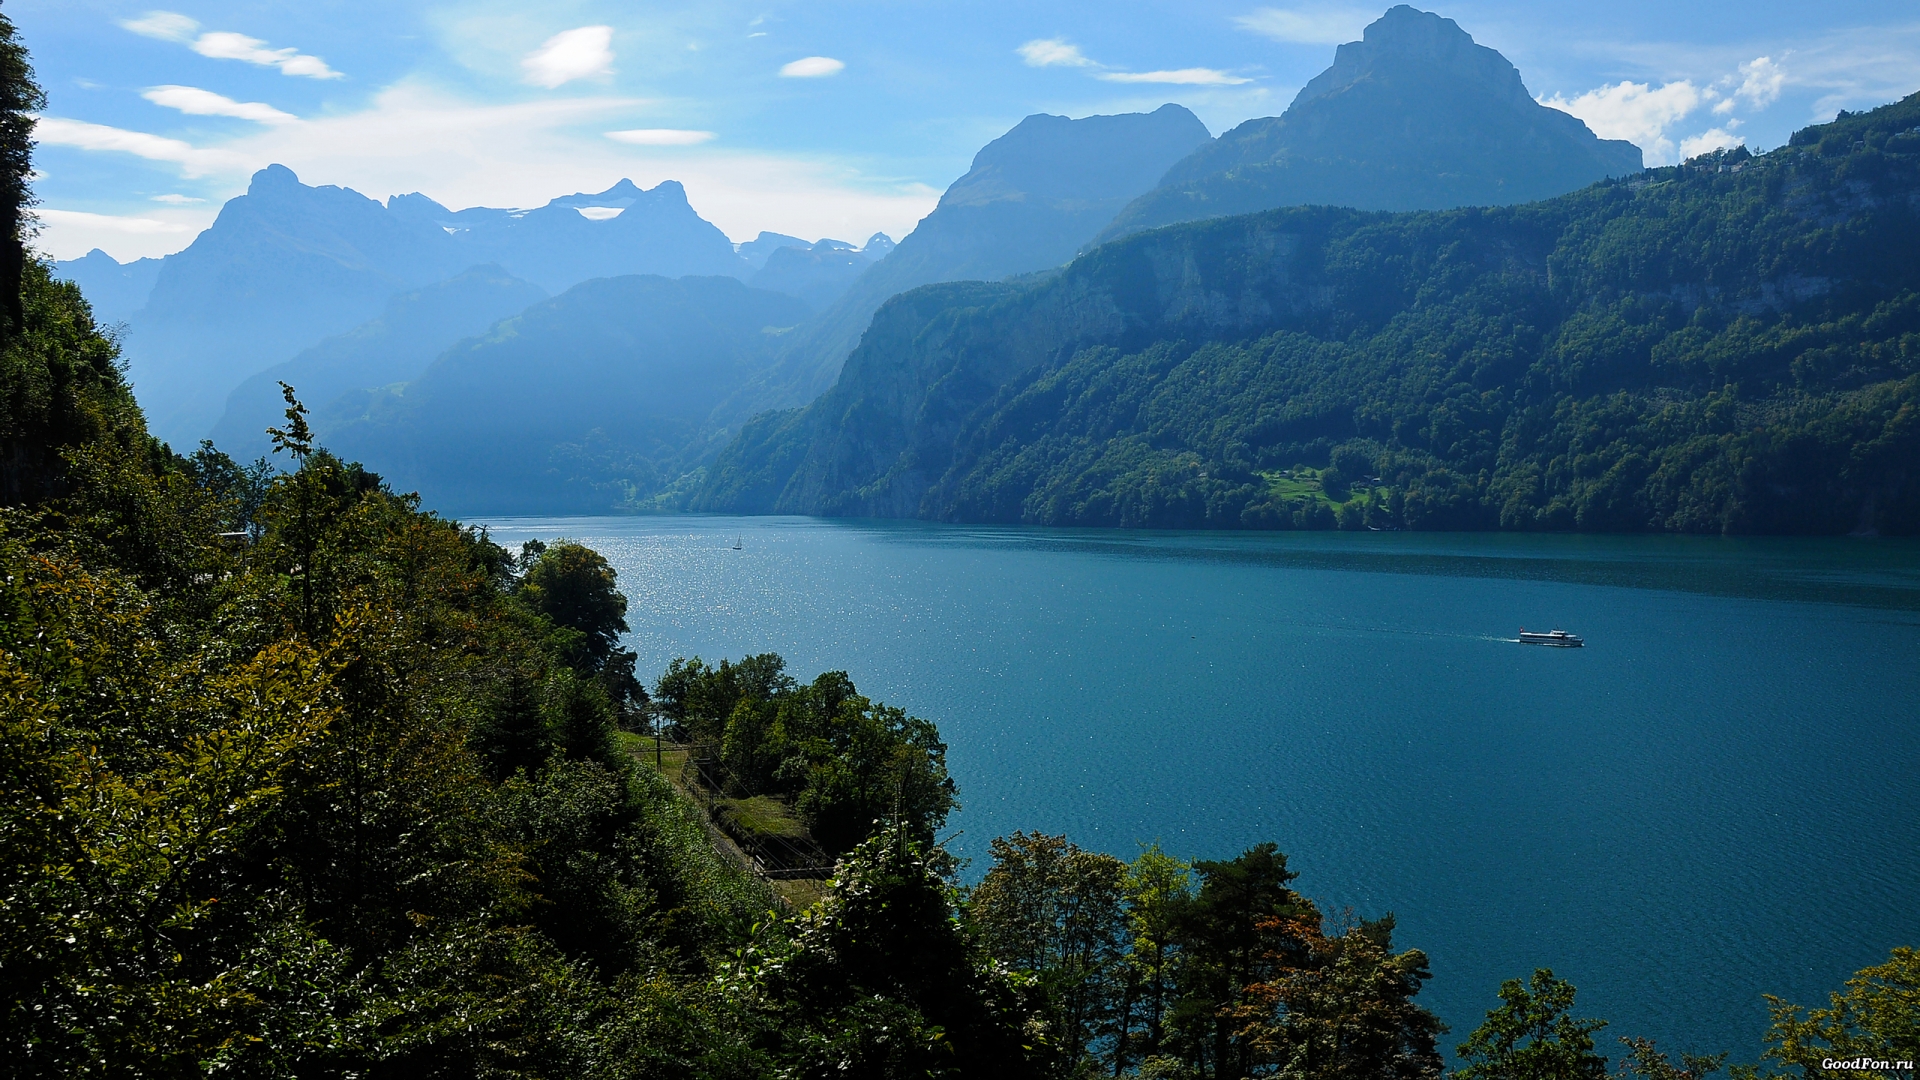 Beautiful Mountain Lake for 1920 x 1080 HDTV 1080p resolution